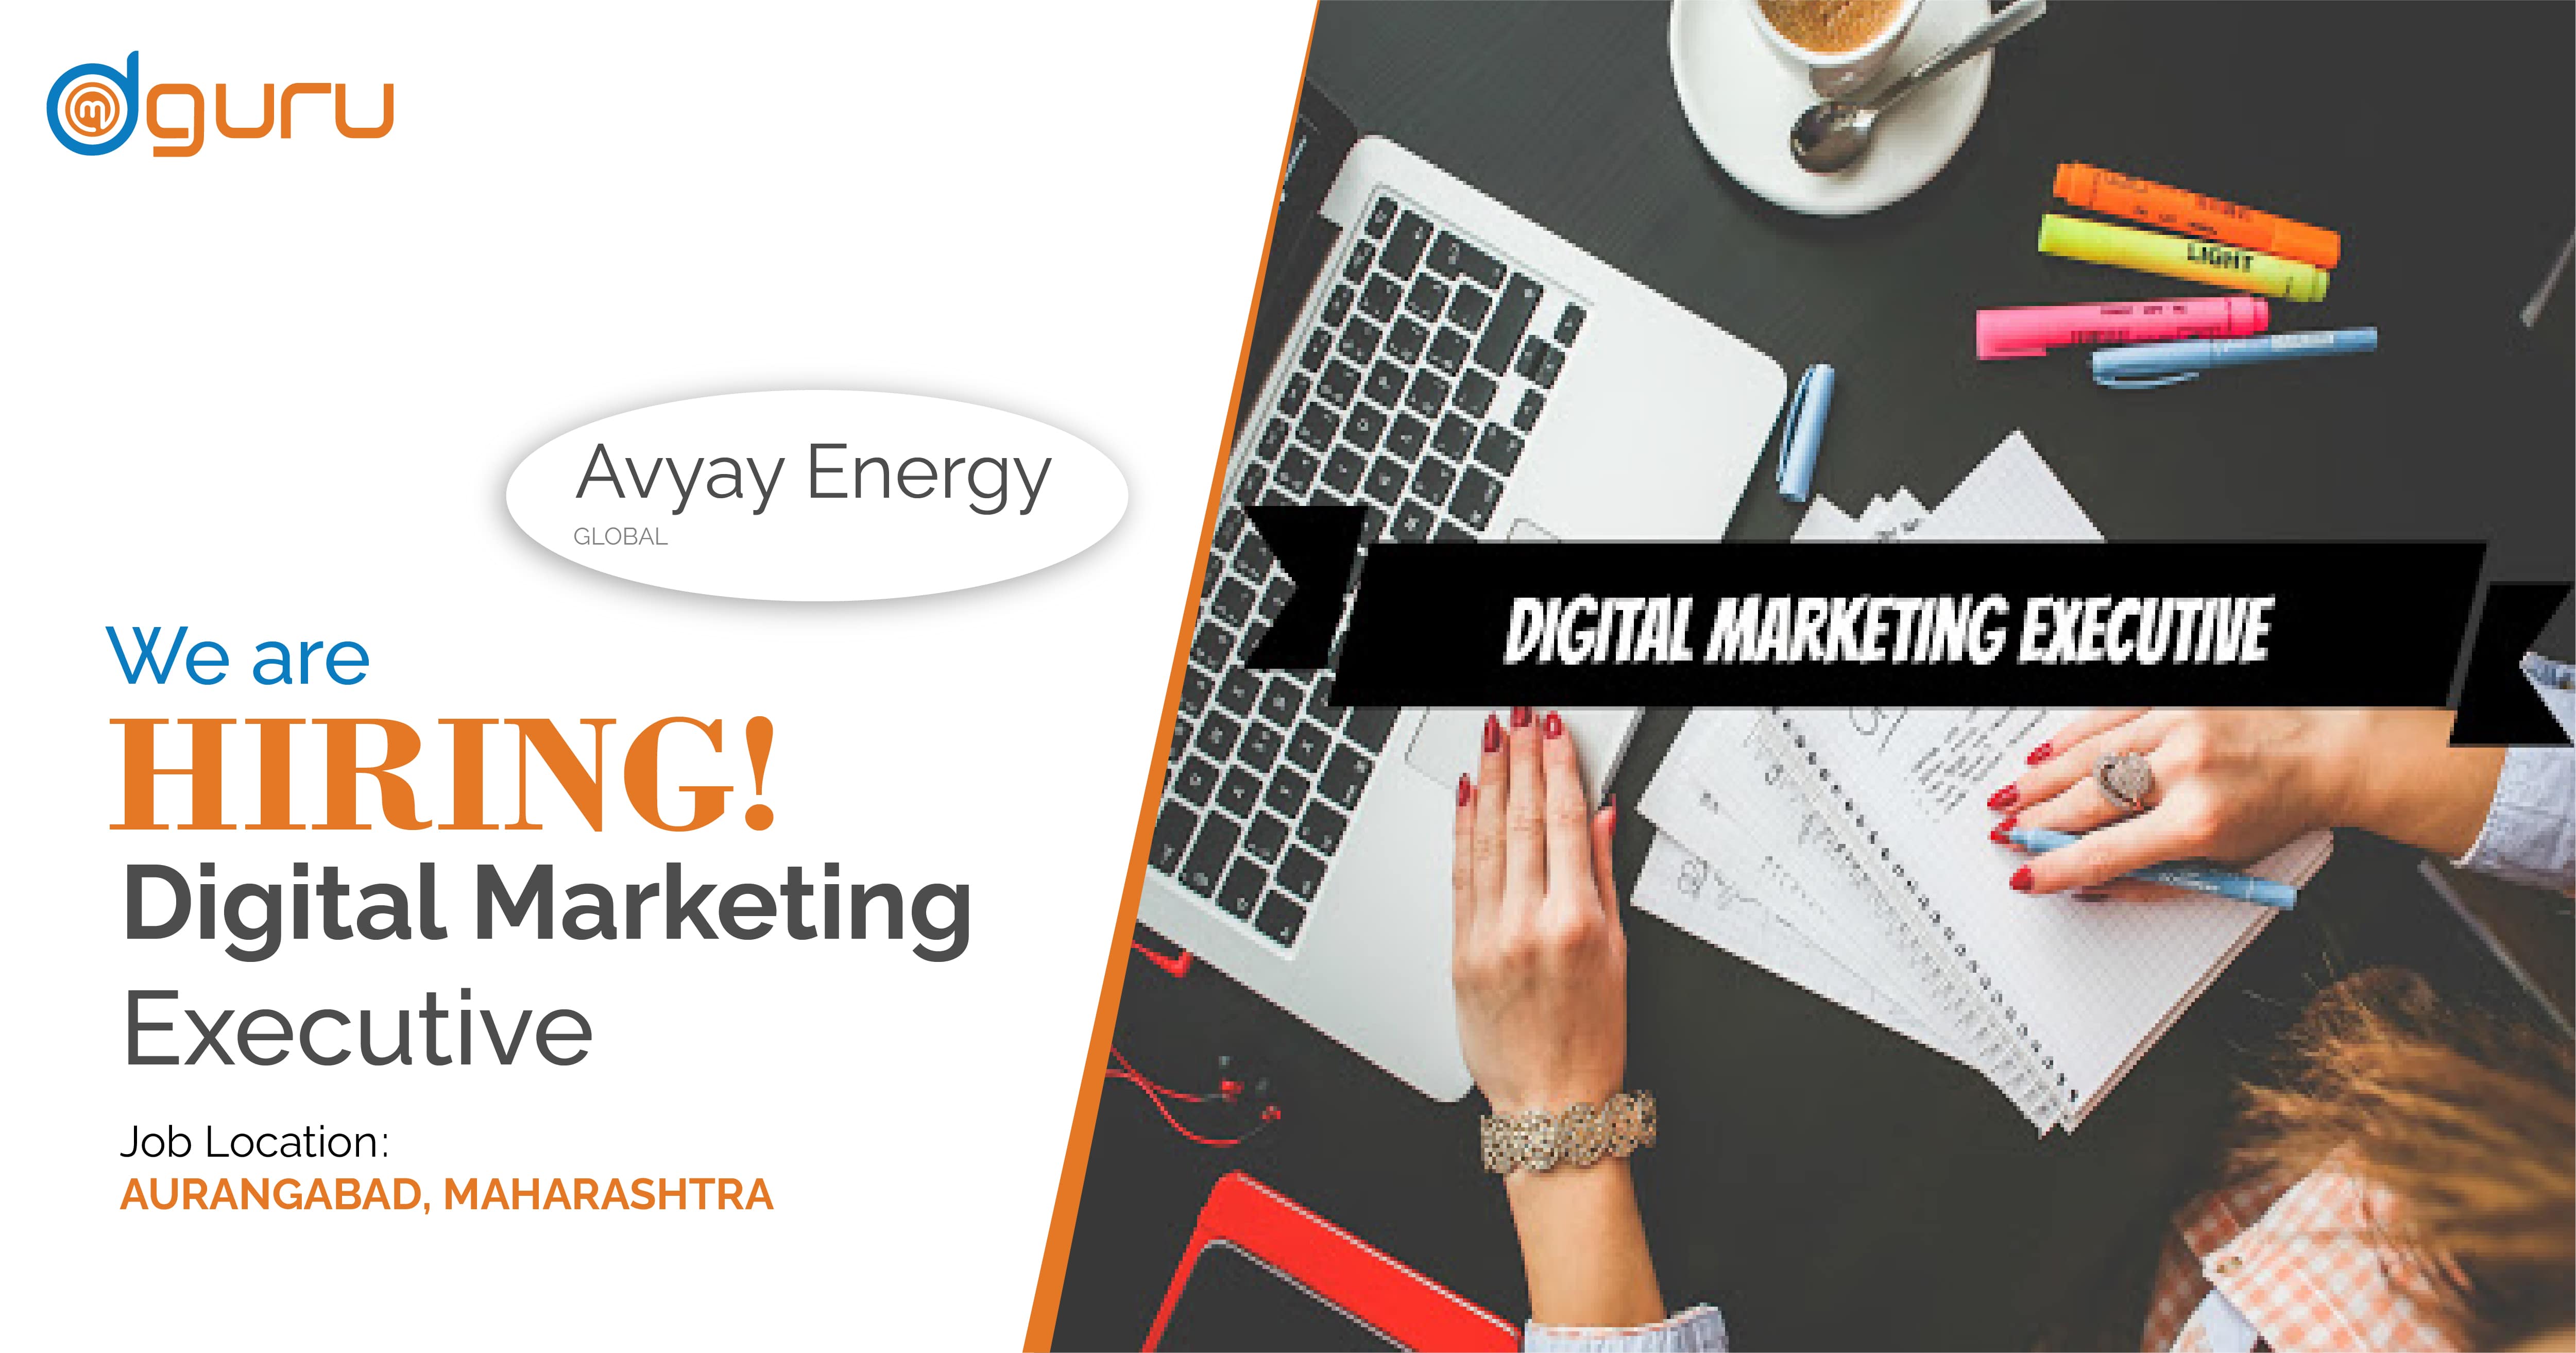 Digital Marketing Executive at Avyay Energy